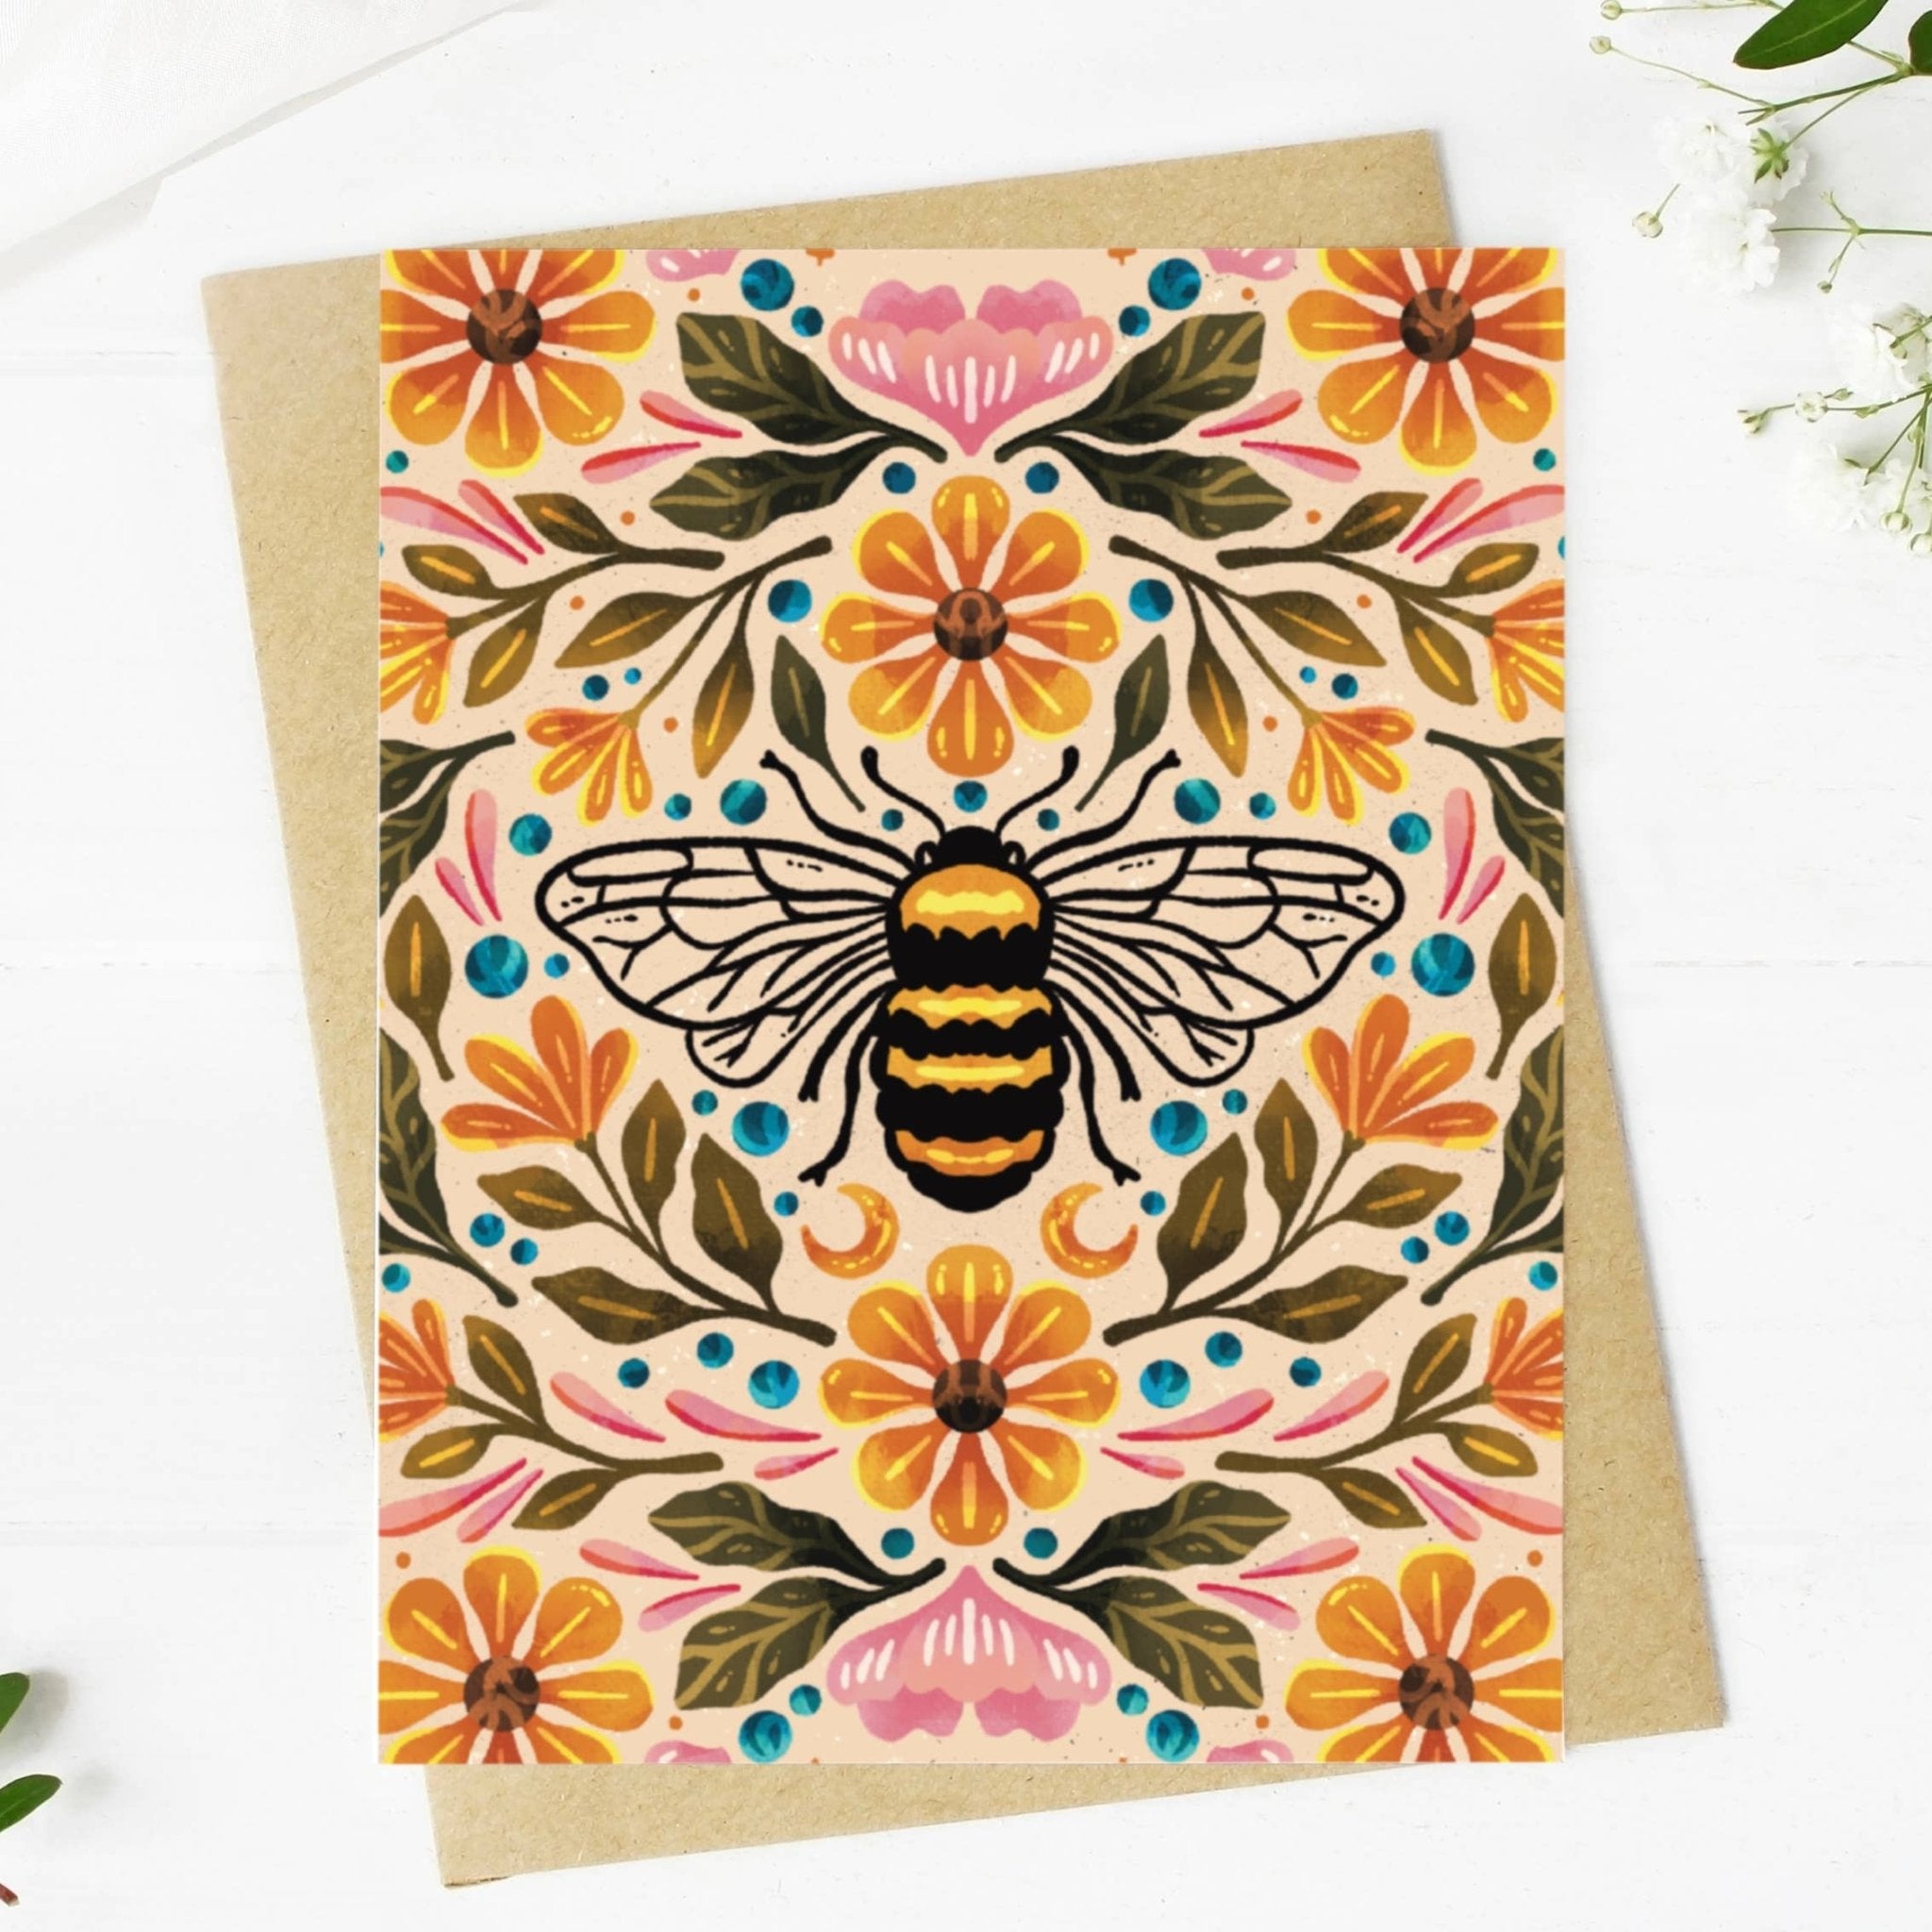 Bee & Floral Greeting Card - Spiral Circle